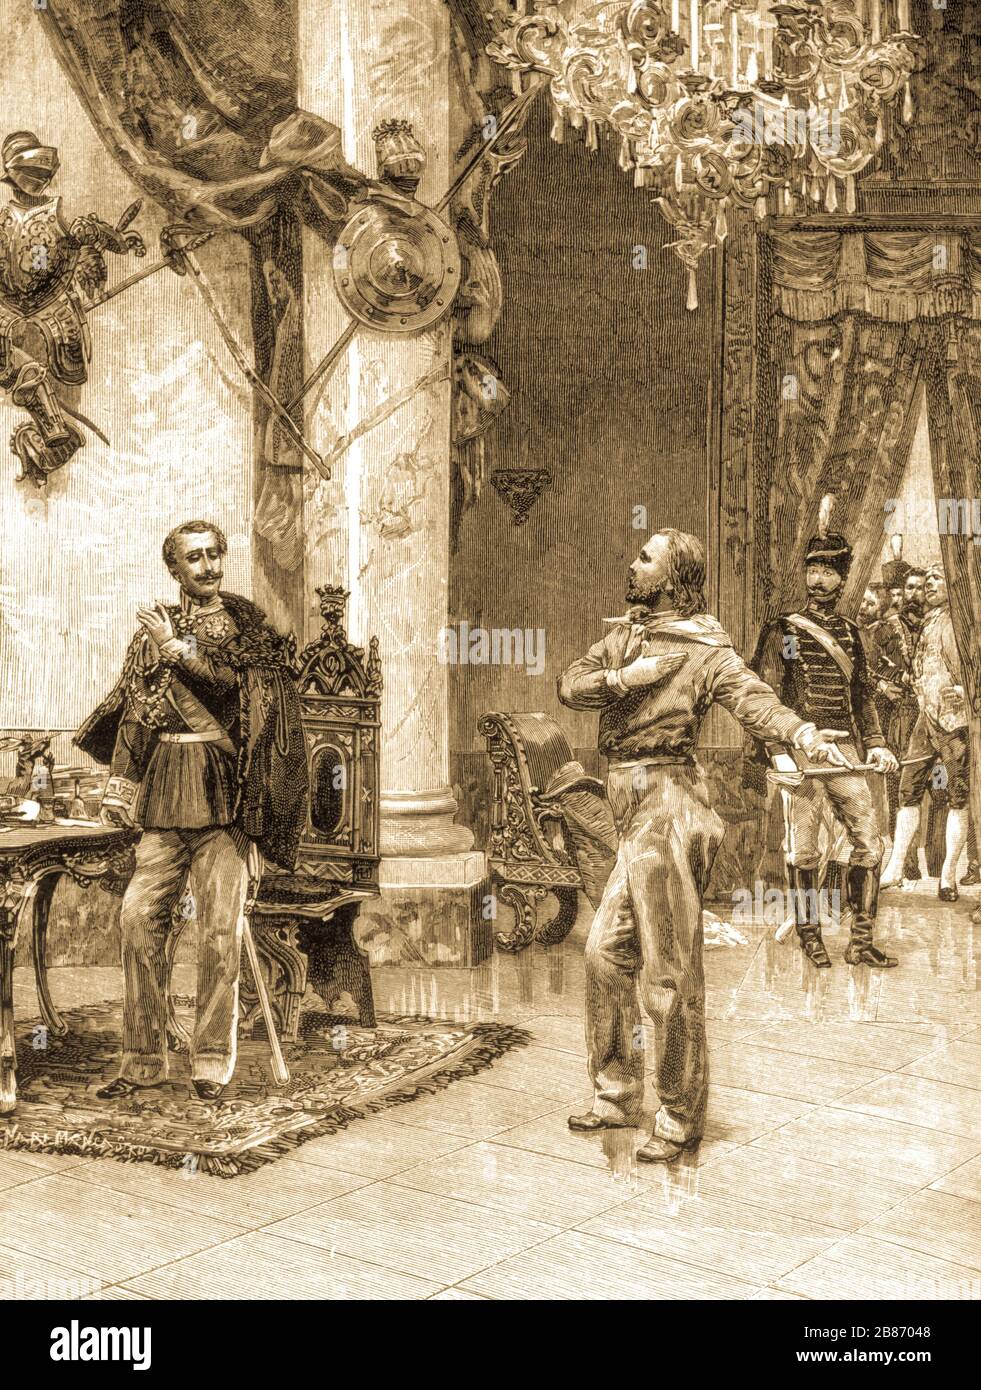 Begegnung zwischen carlo alberto di savoia und giuseppe garibaldi in Roverbella, 1848 Stockfoto